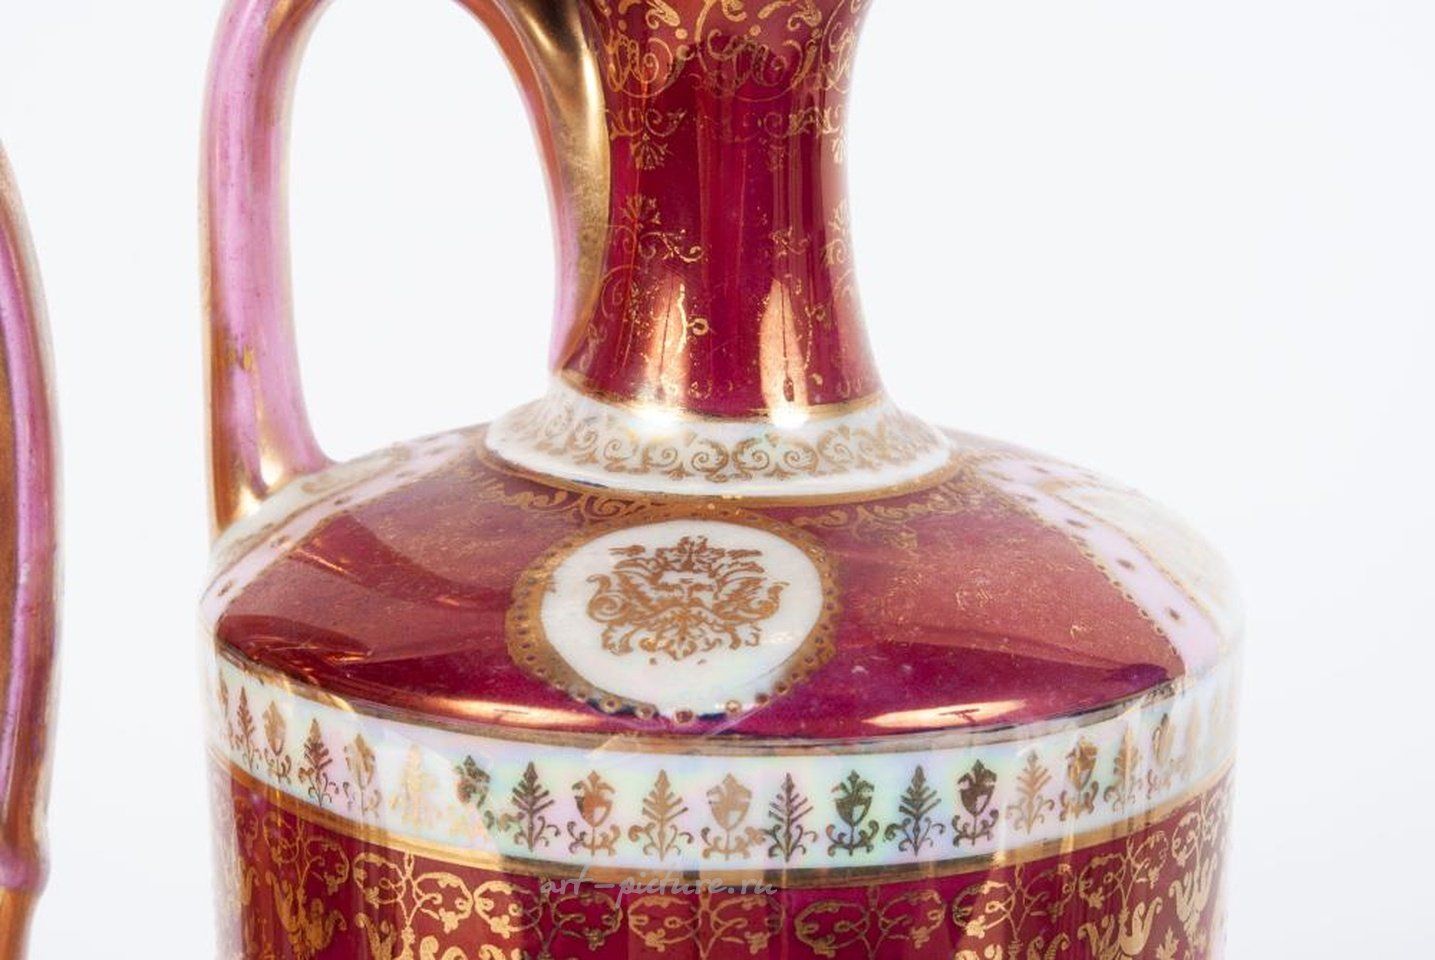 Royal Vienna , Европейская коллекция фарфора